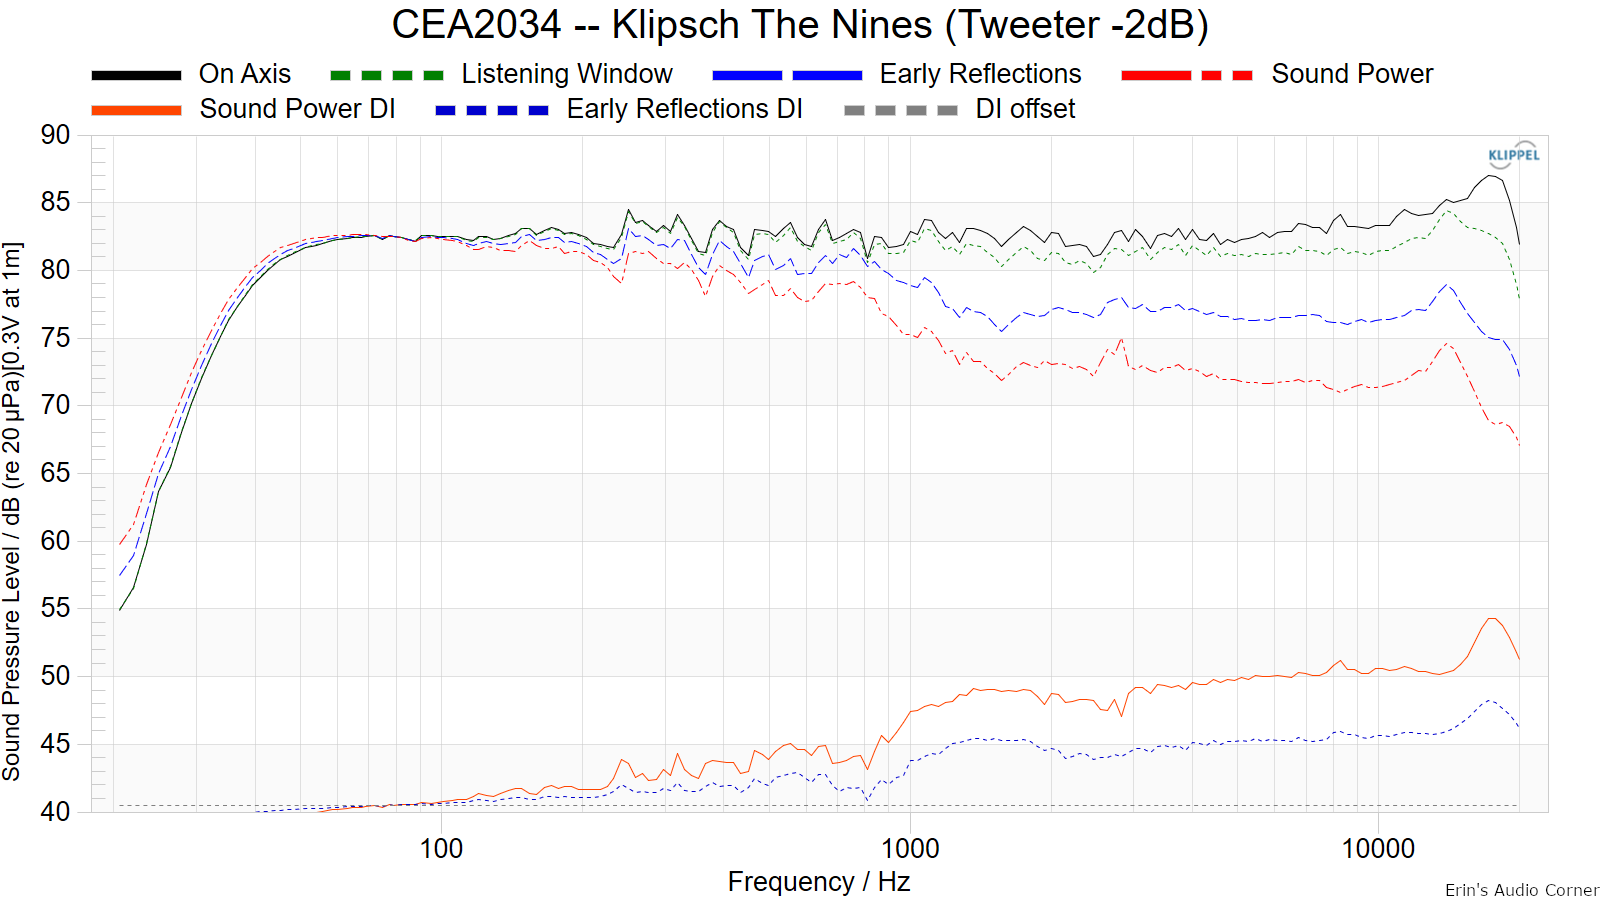 CEA2034 -- Klipsch The Nines (Tweeter -2dB).png